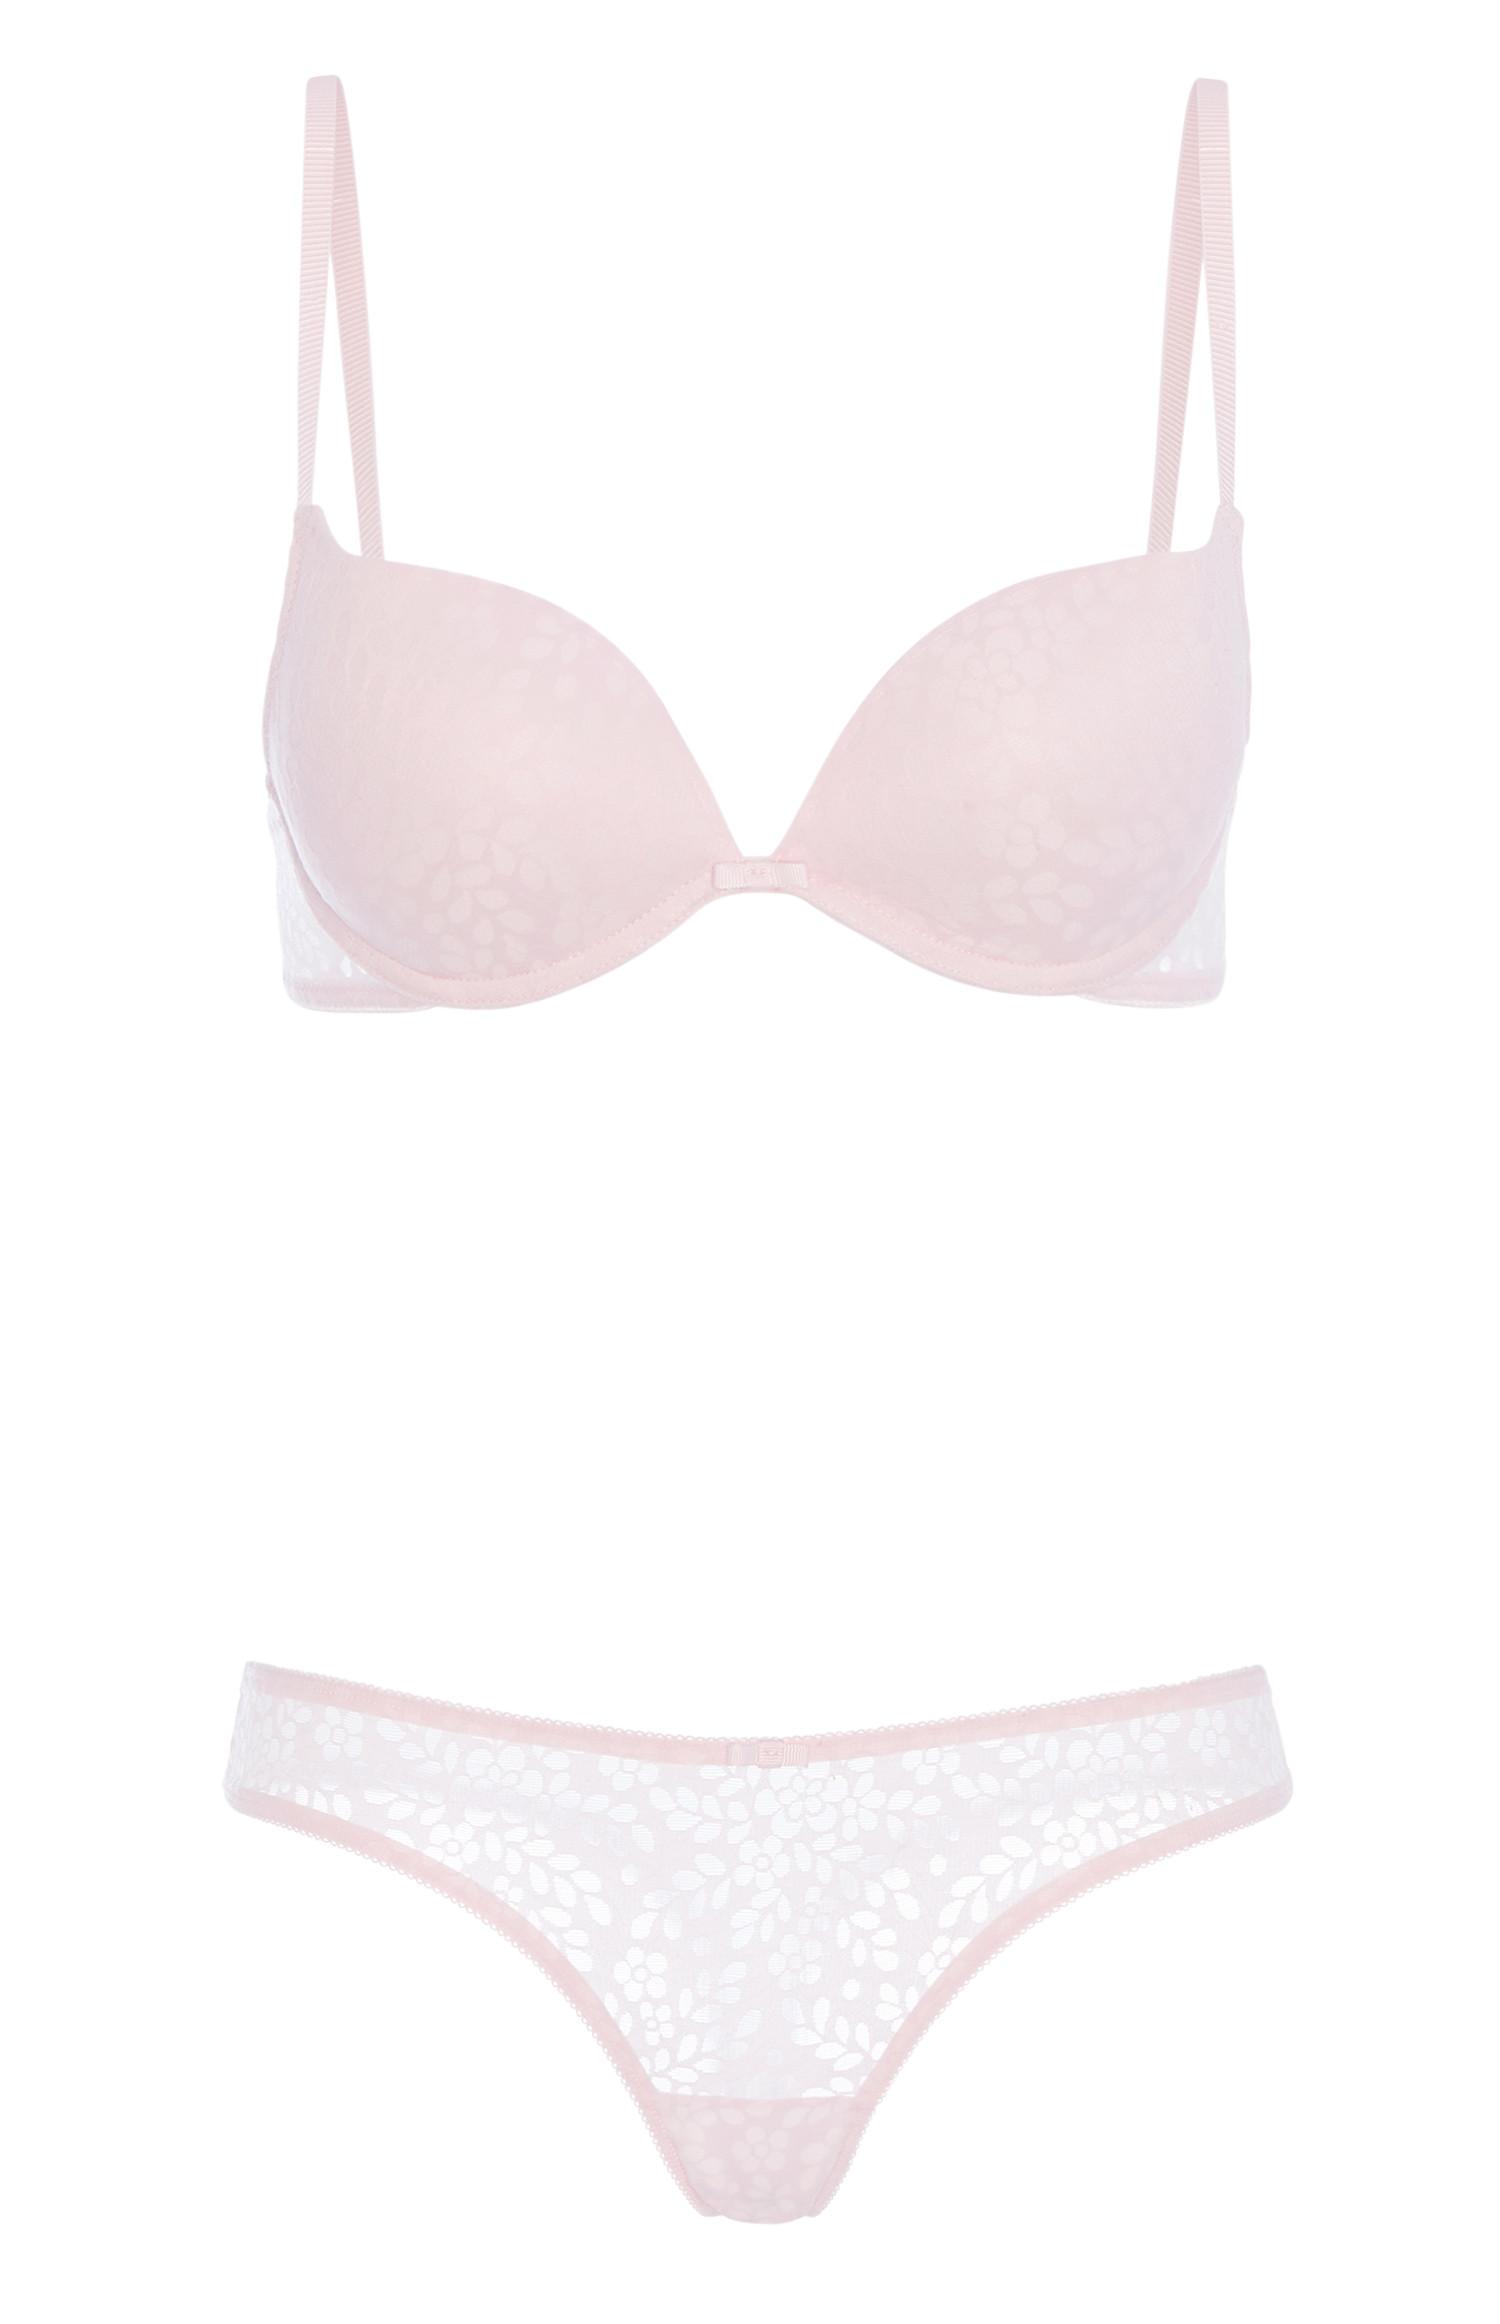 Lilac Lace Underwear Set | Sets | Lingerie & Underwear | Womens ...